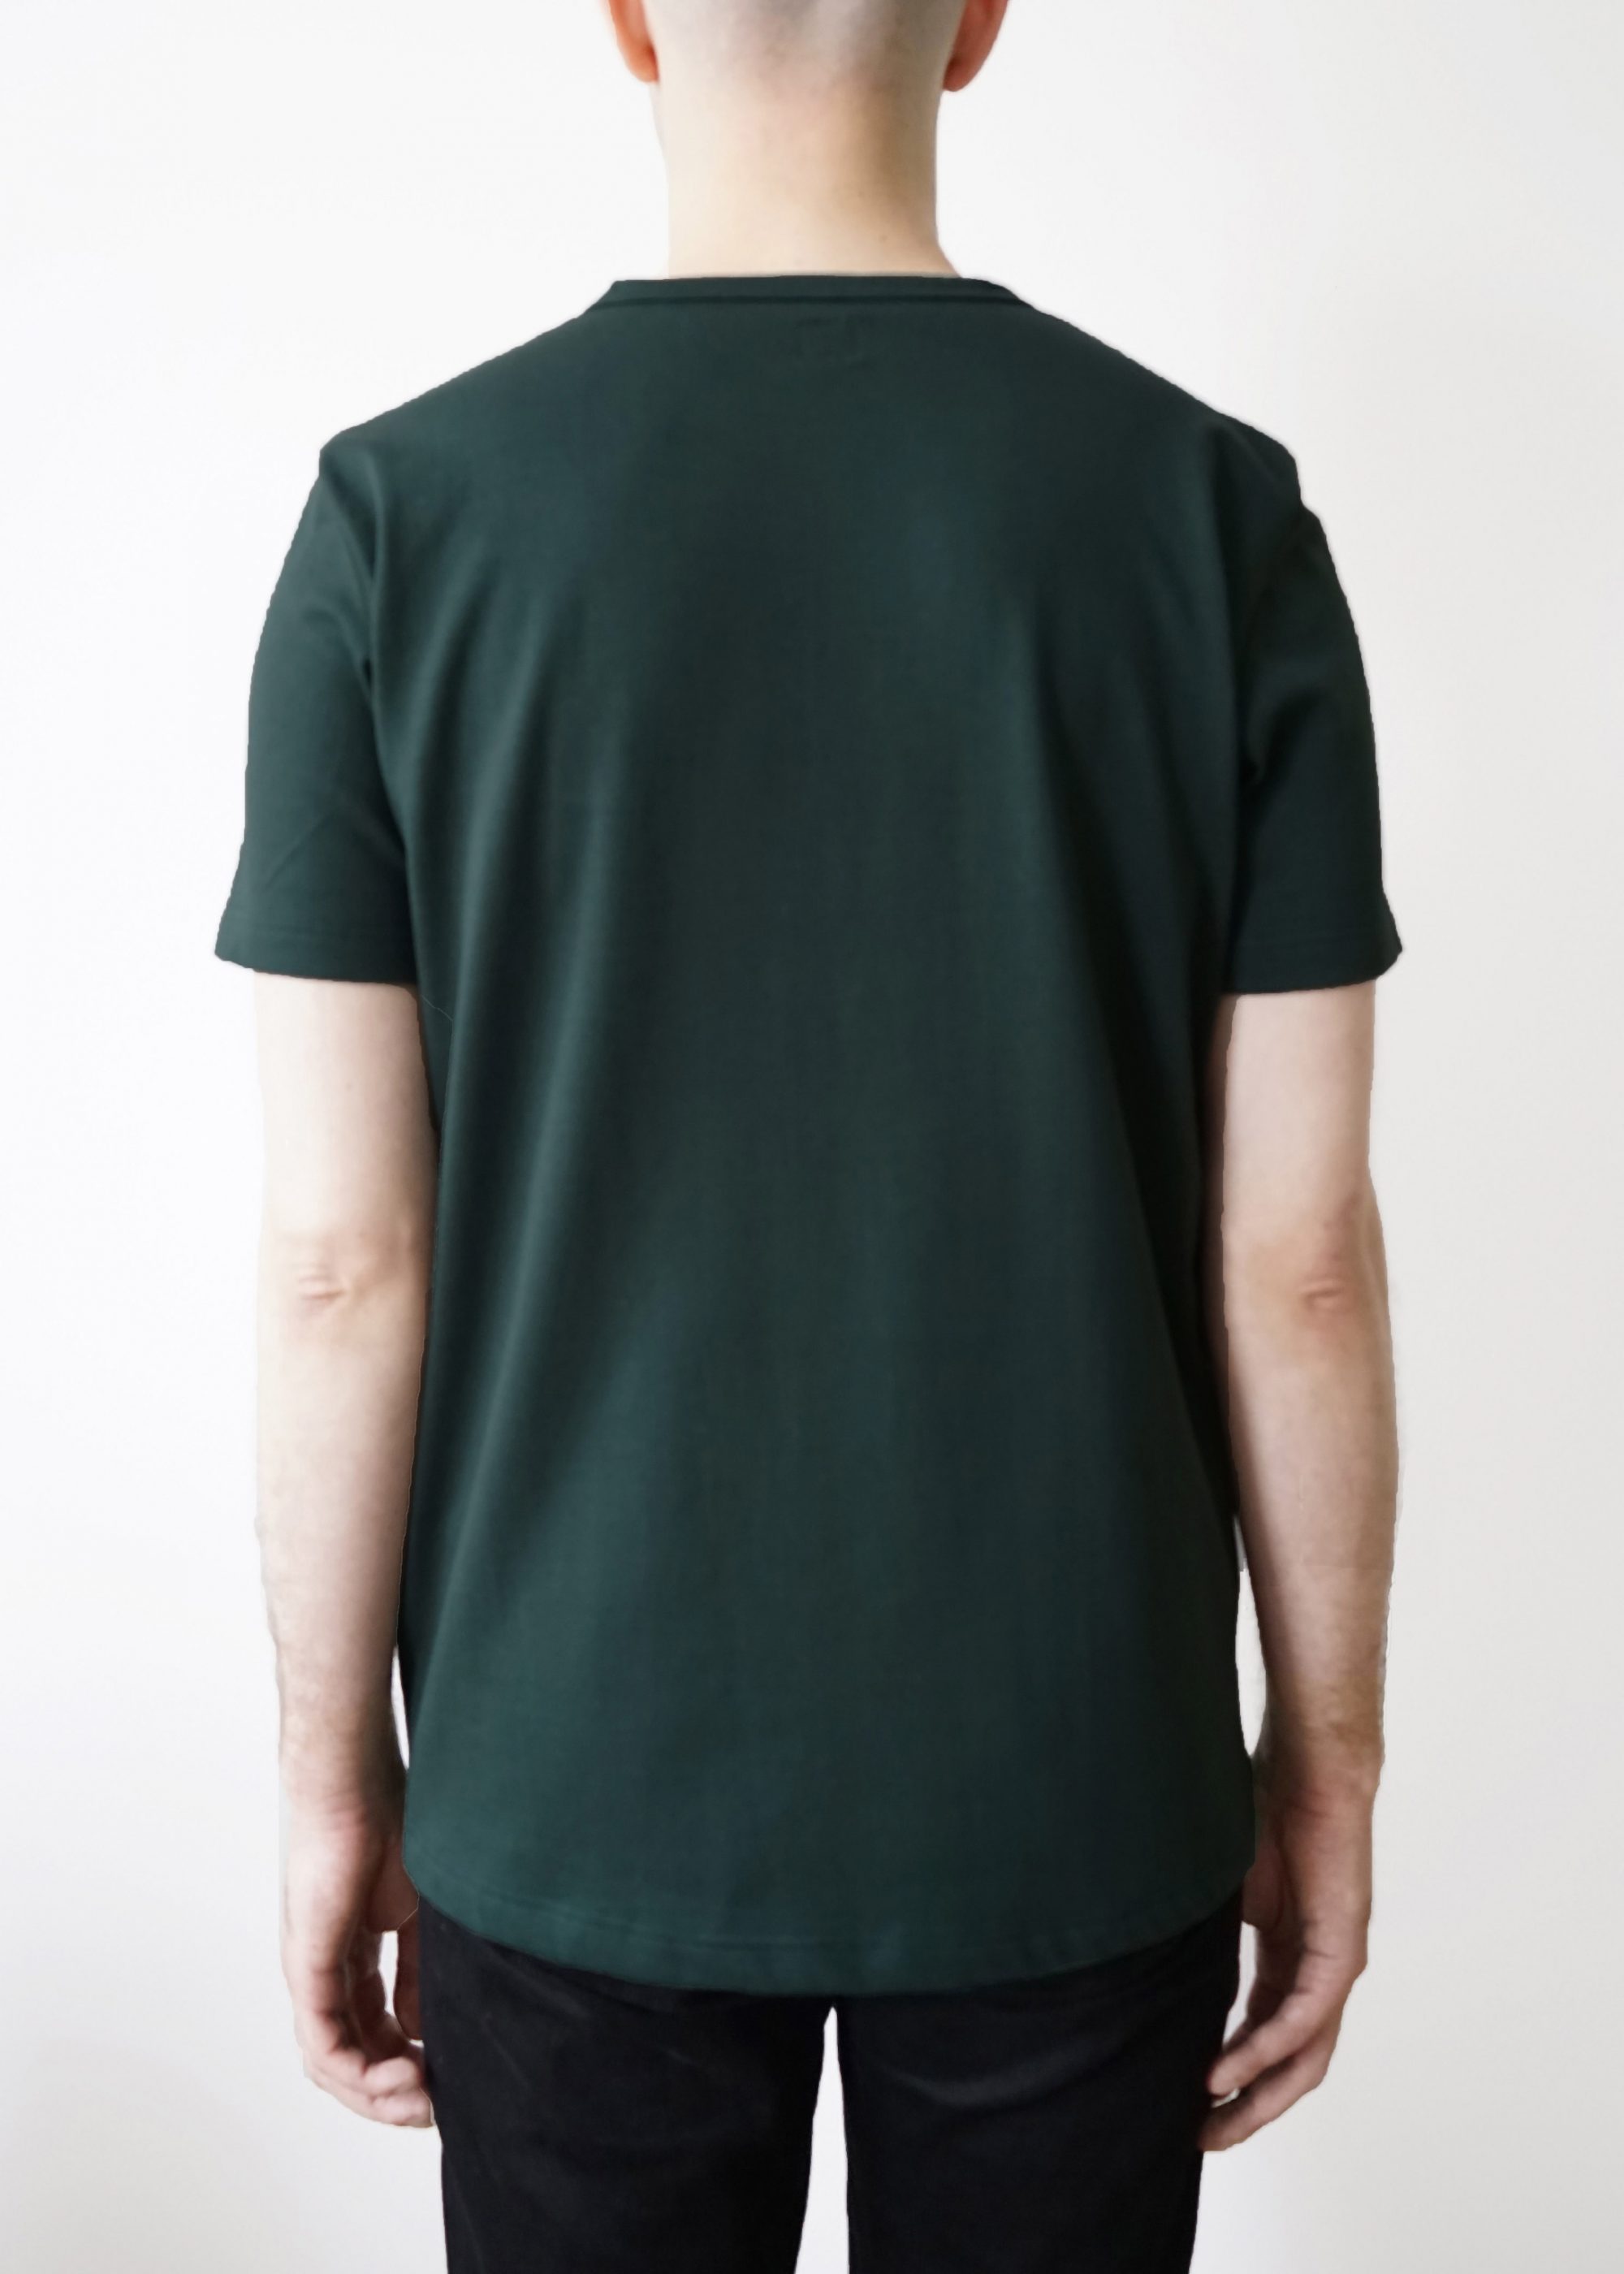 Product image for »Baum« Dark Green Ringer T-Shirt 100% Organic Cotton